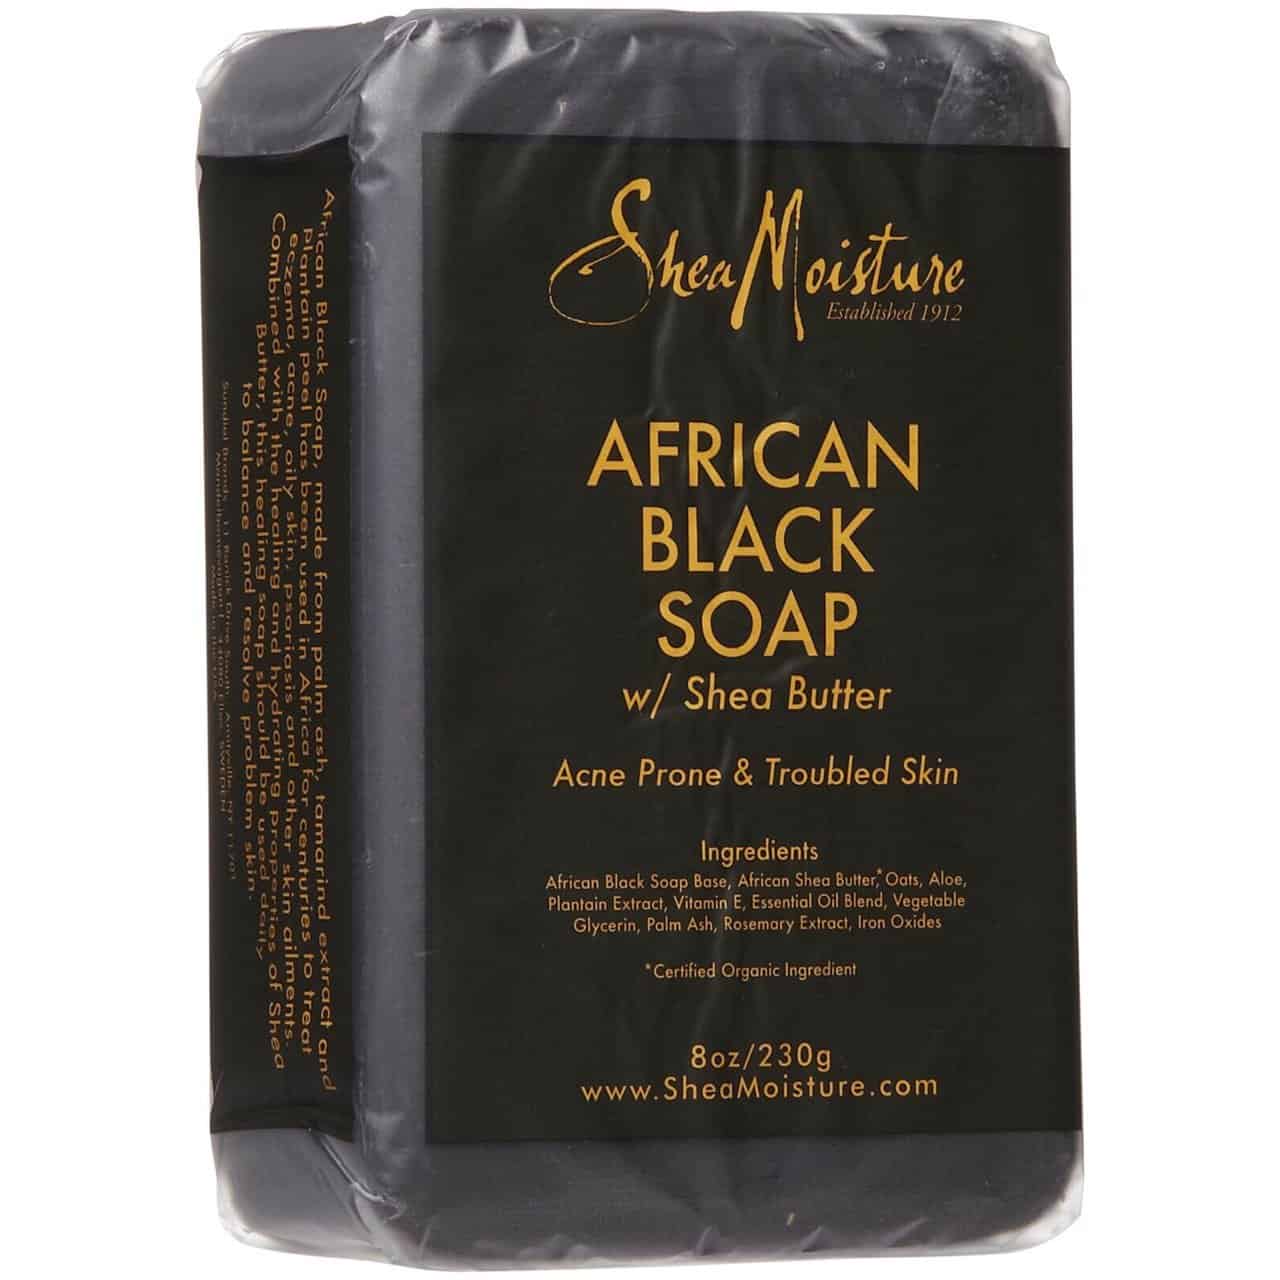  صابون للبشرة الحساسة SheaMoisture Bar Soap for Troubled Skin African Black Soap Cleanse